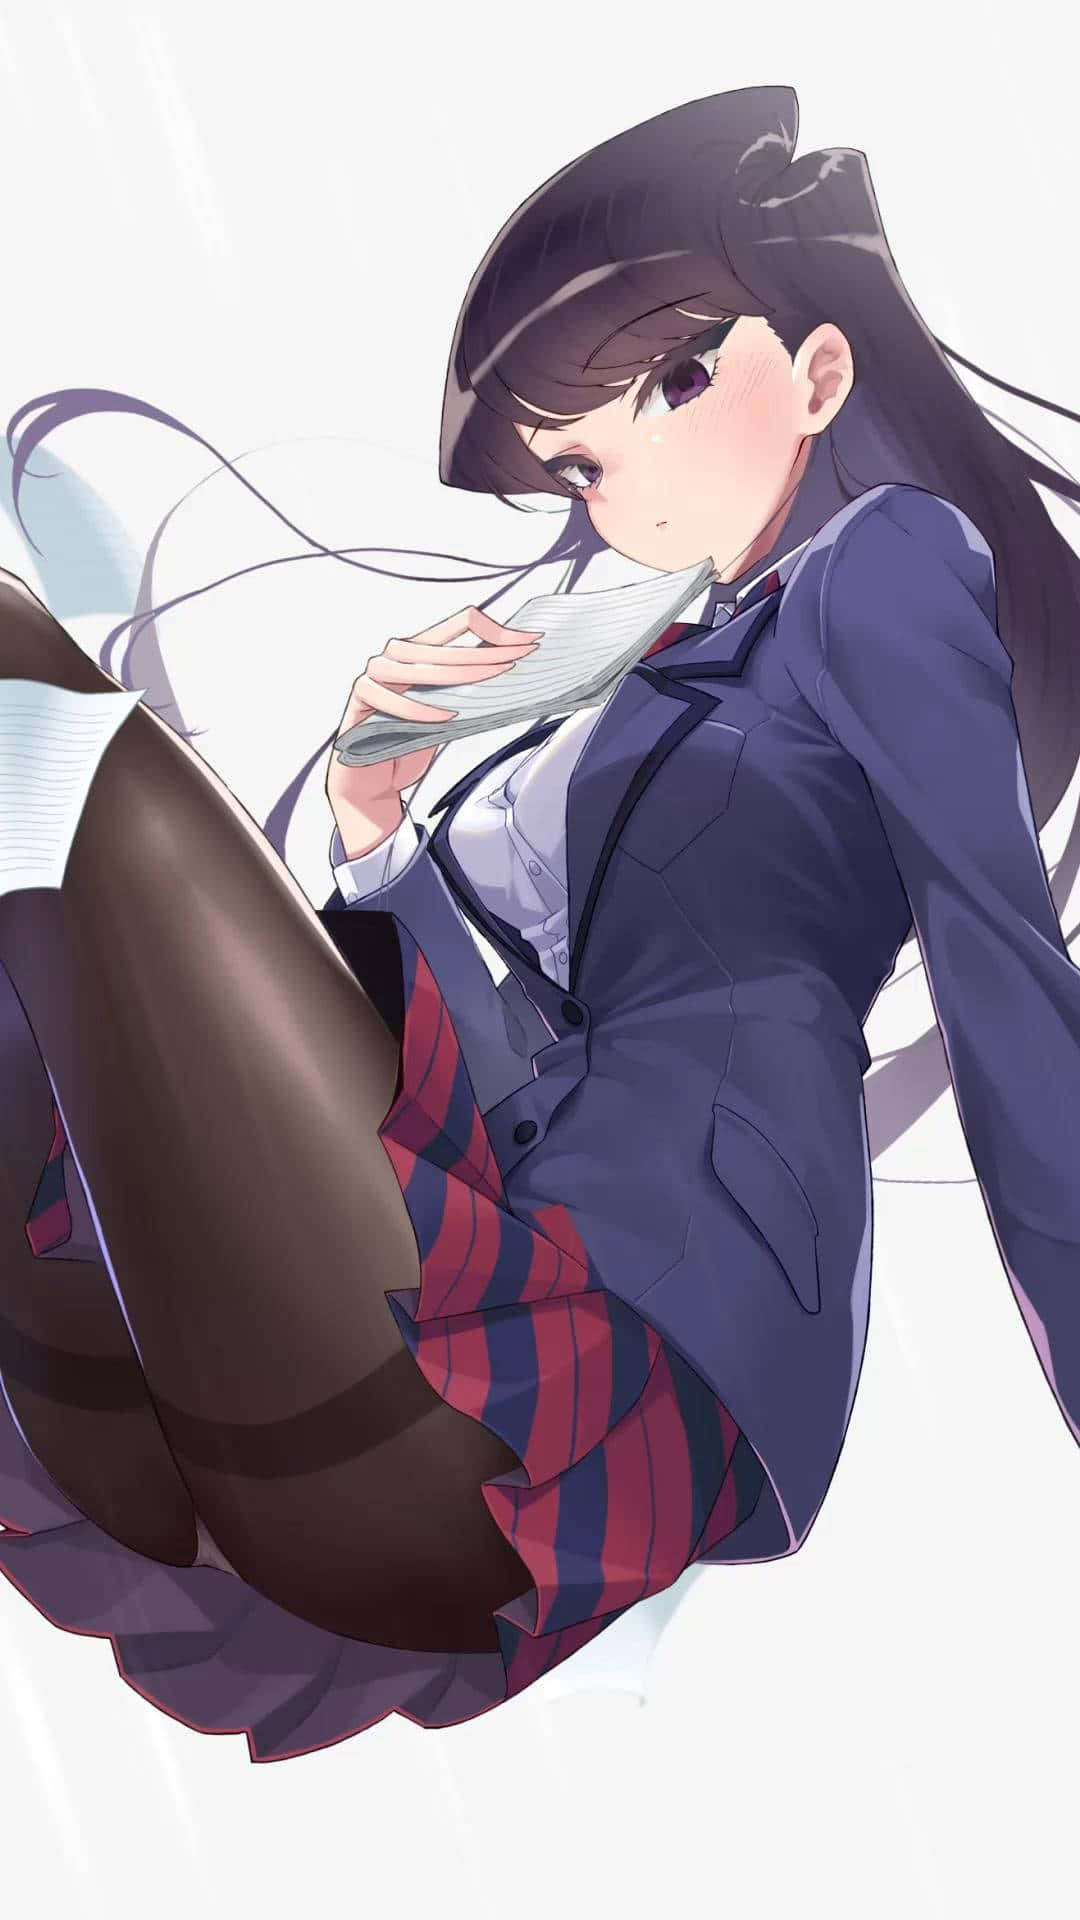 Hot Anime Komi Shouko Uniform Wallpaper